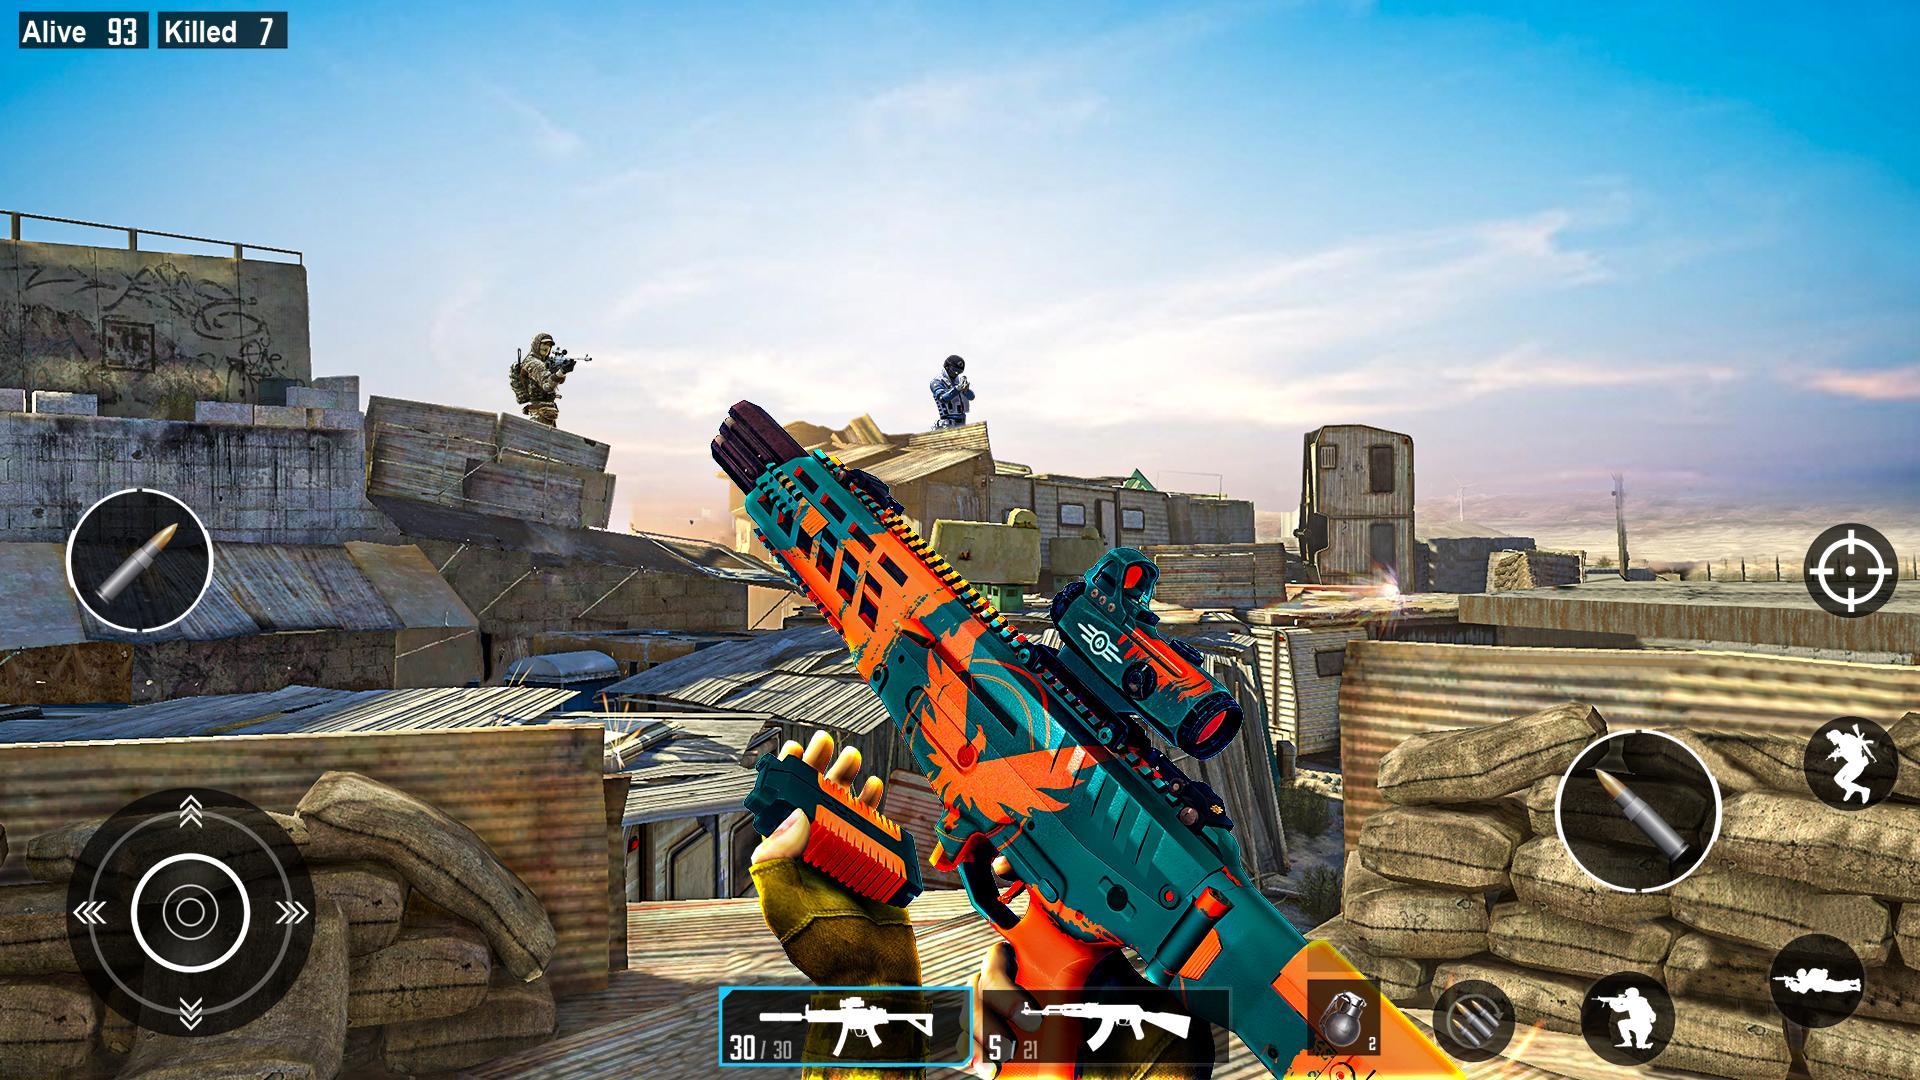 Real Commando Mission - Free Shooting Games 2020 3.5 Screenshot 12